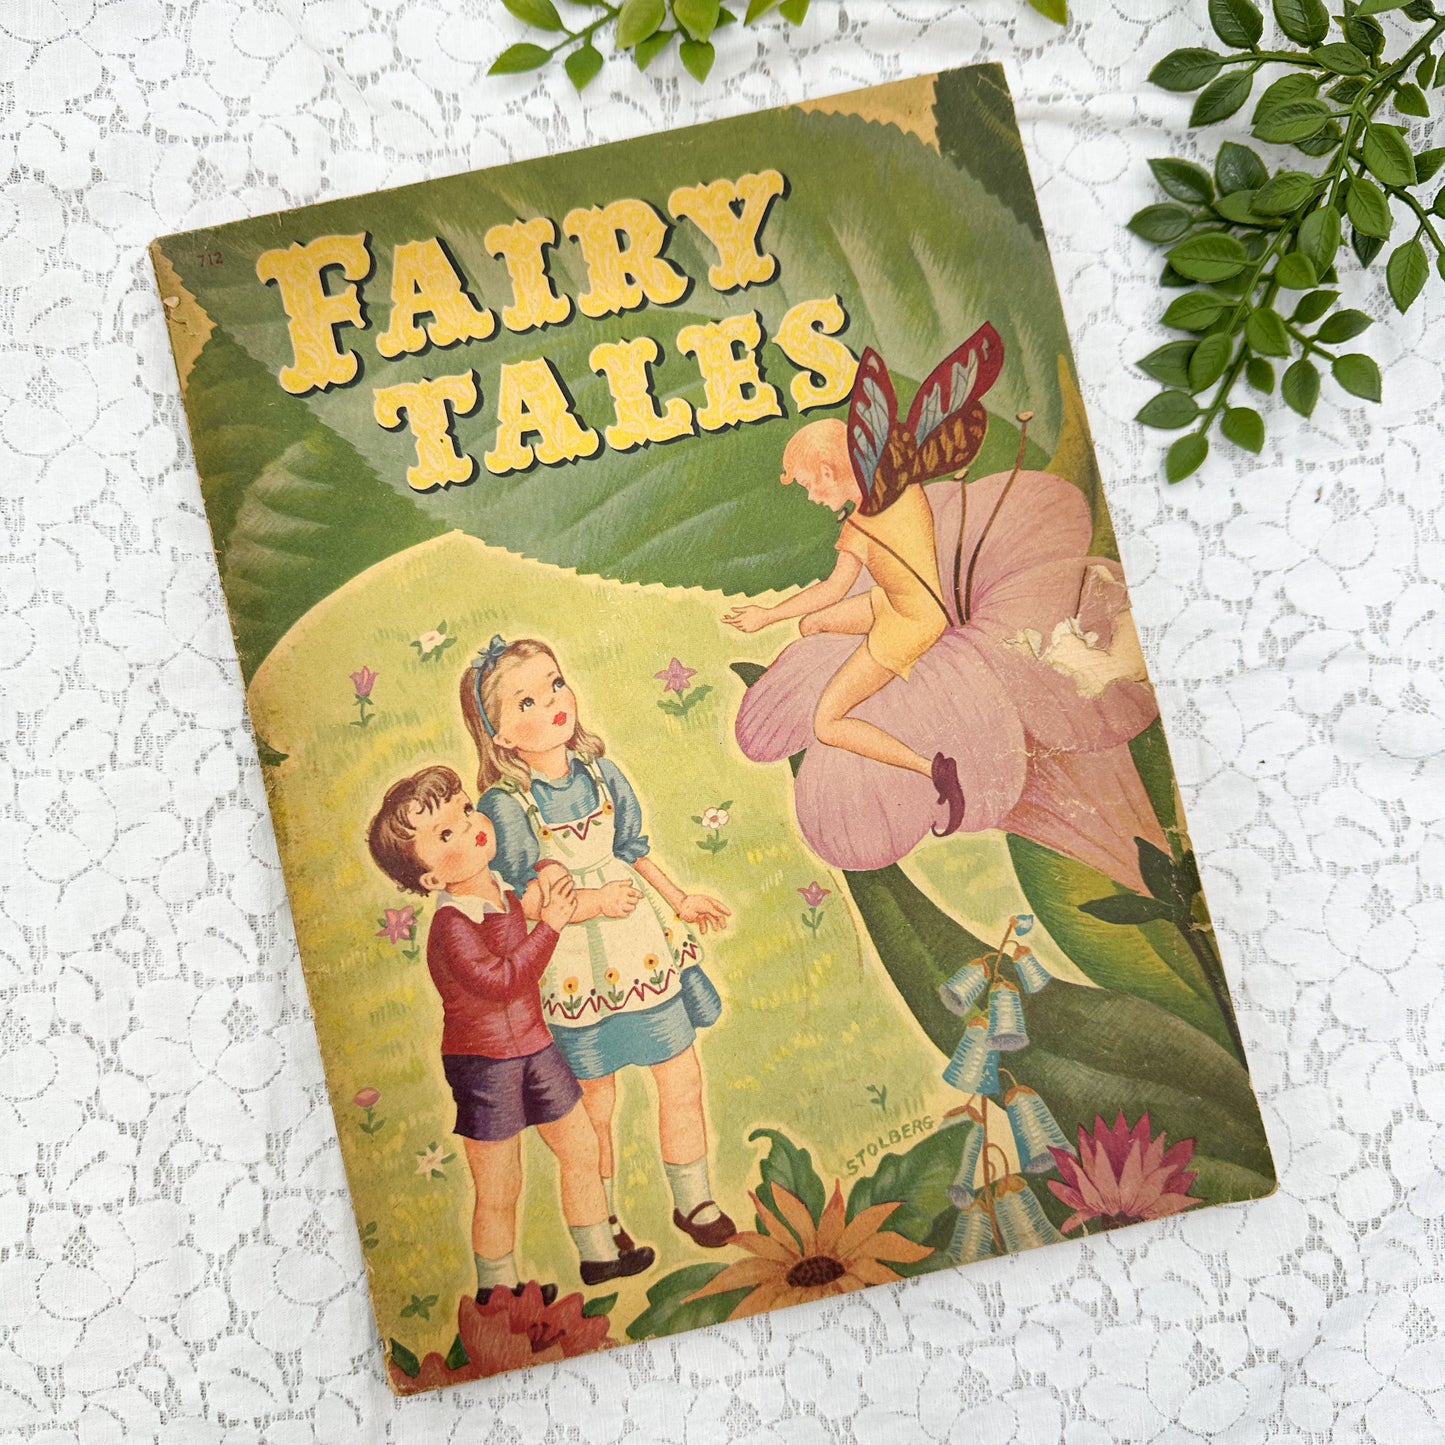 Fairy Tales-1944